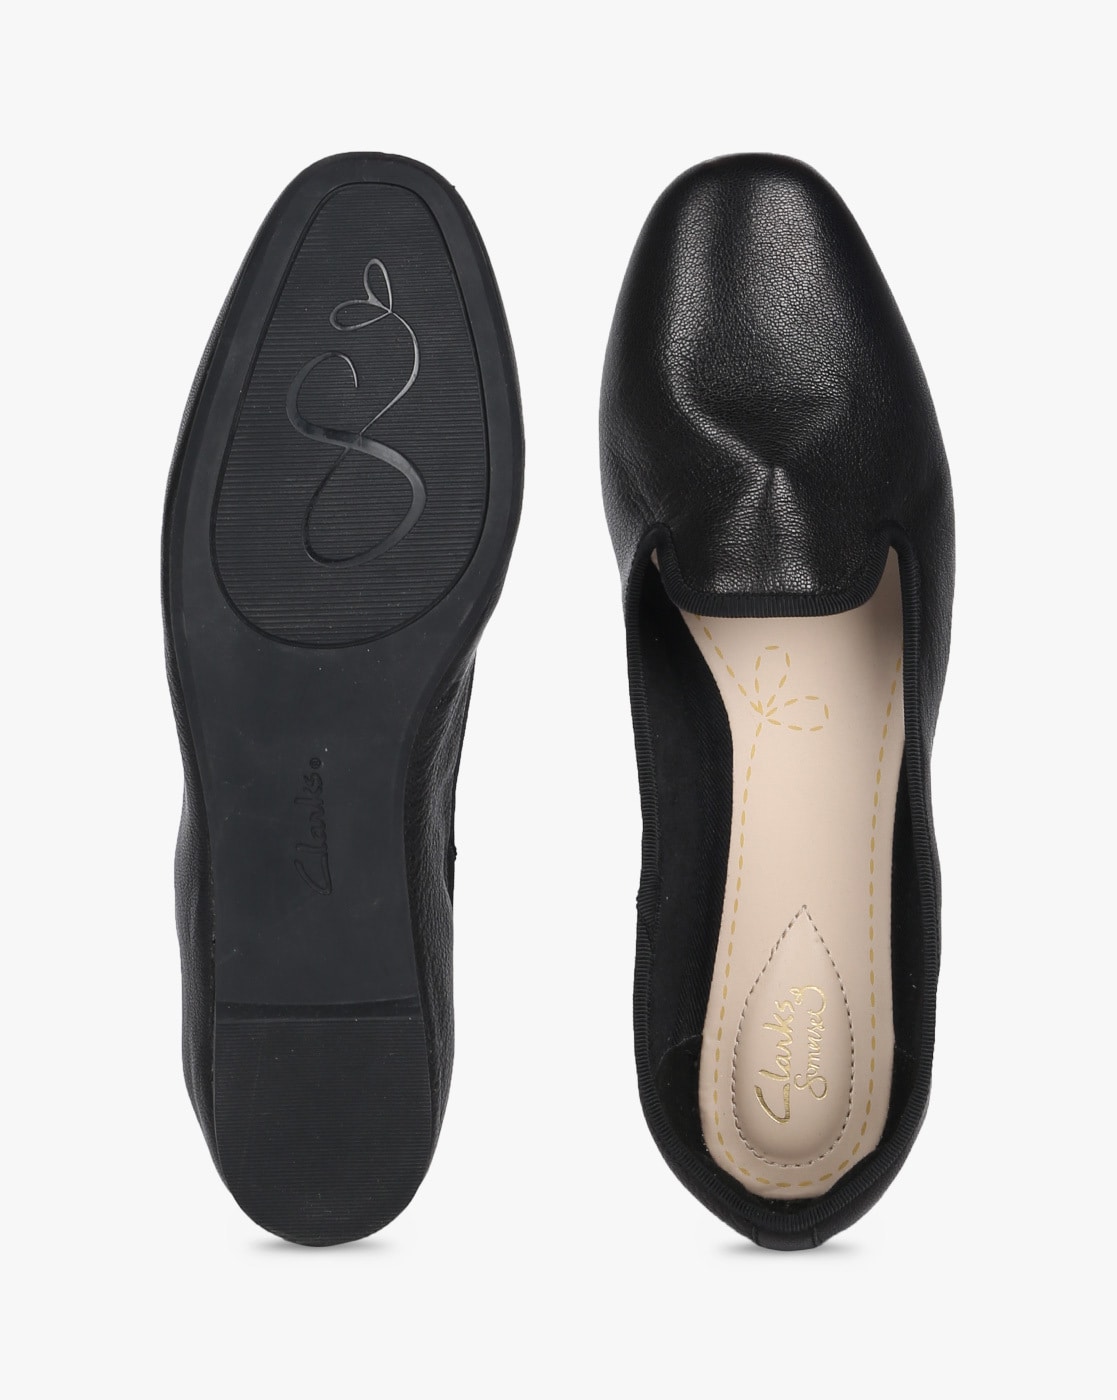 Clarks Black Leather ladies shoes/flats/pumps 5.5/39-6.5/40 Е Wider fit BNWB